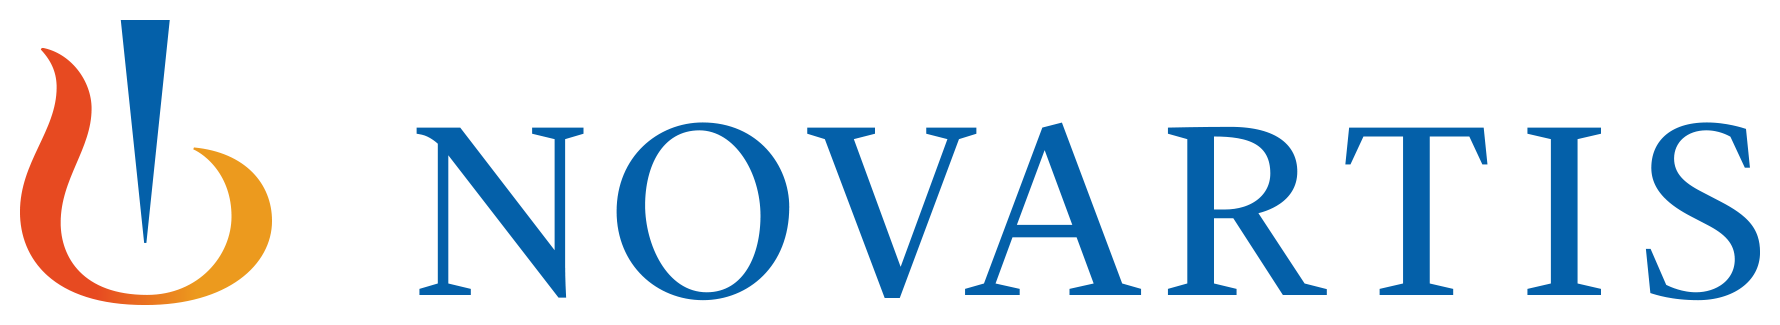 novartis logo pos rgb 1780x325